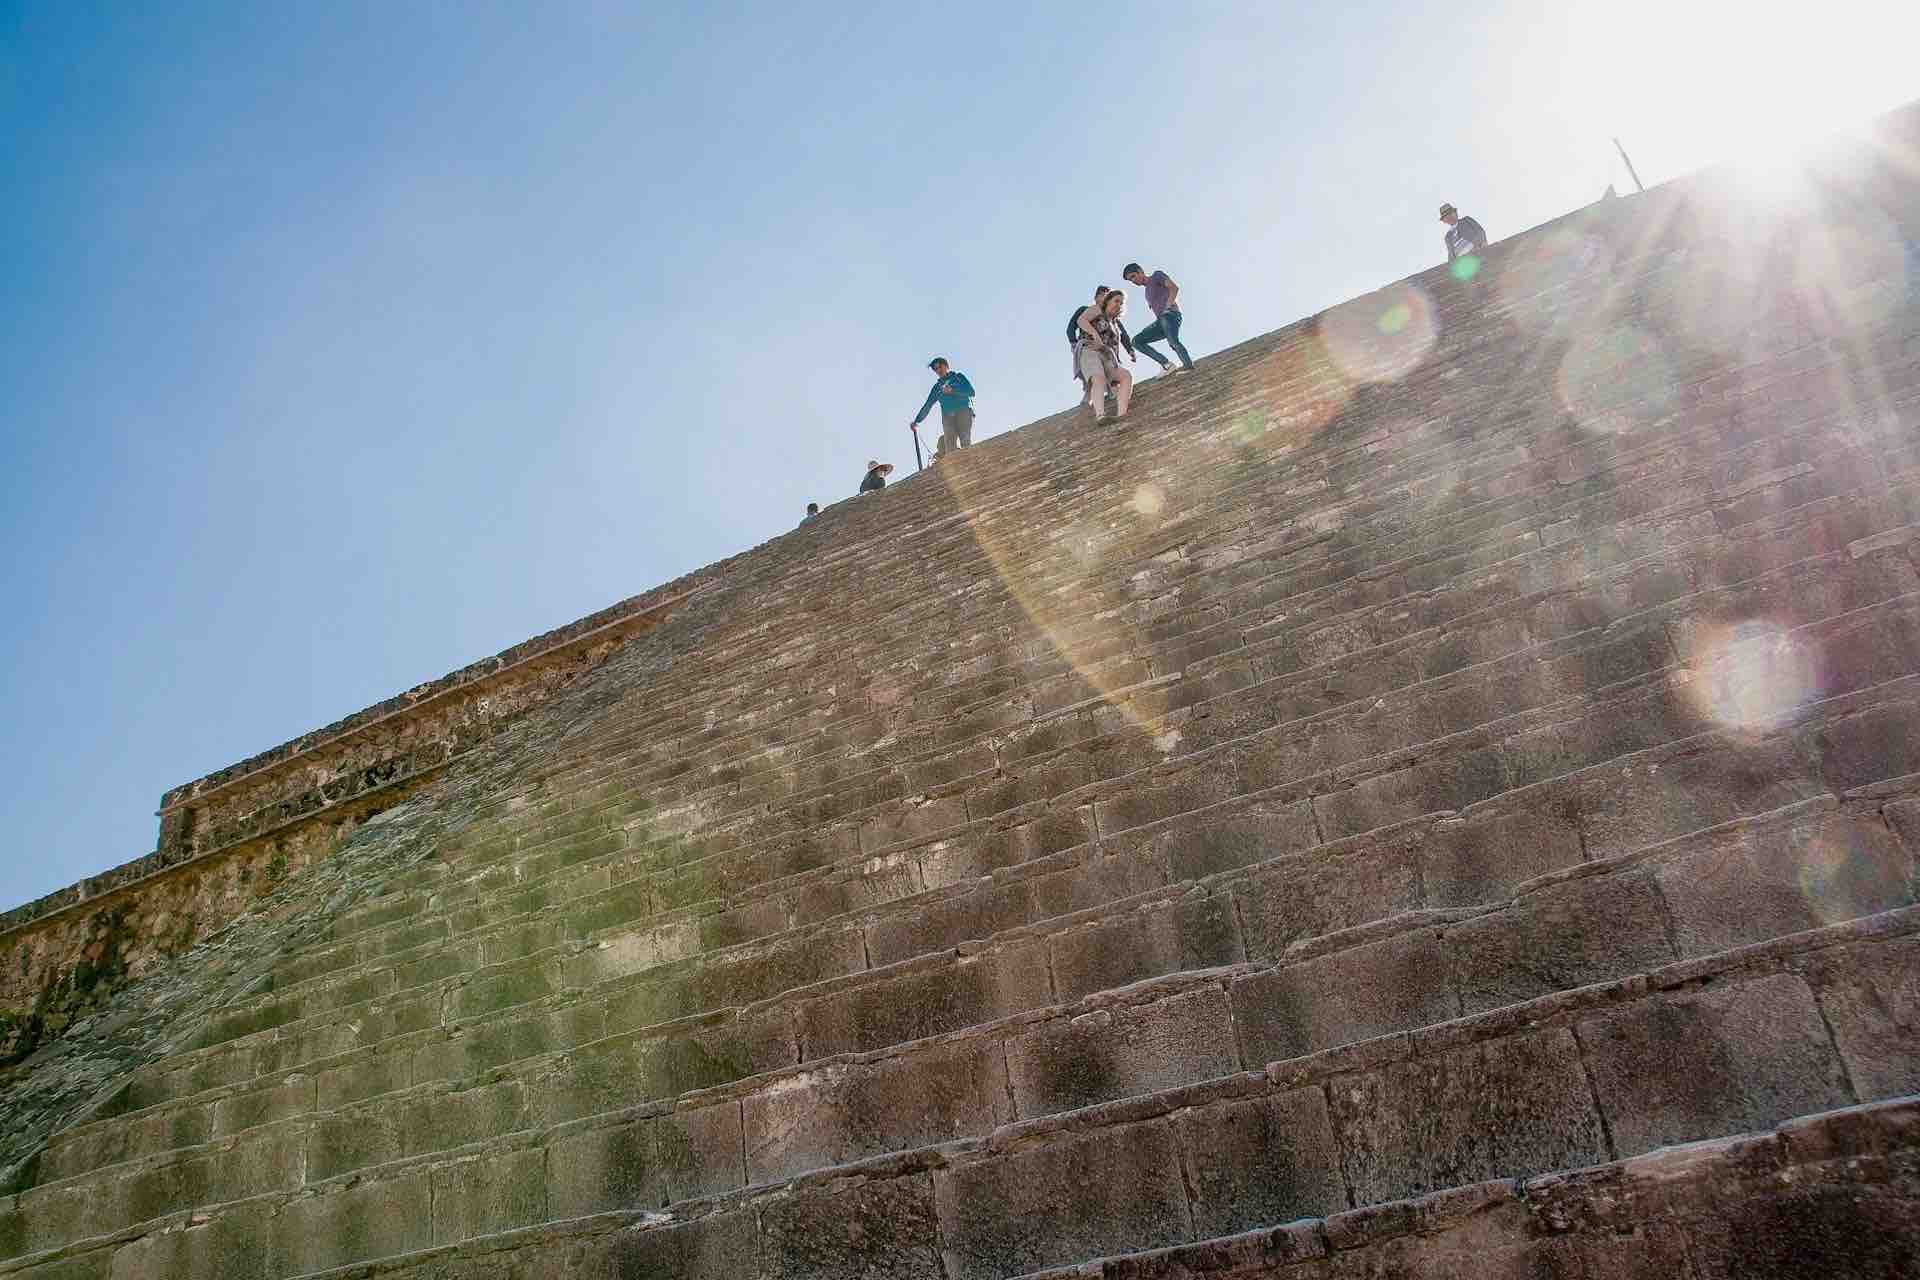 Pirámides de Teotihuacán tour visitantes subiendo escalones